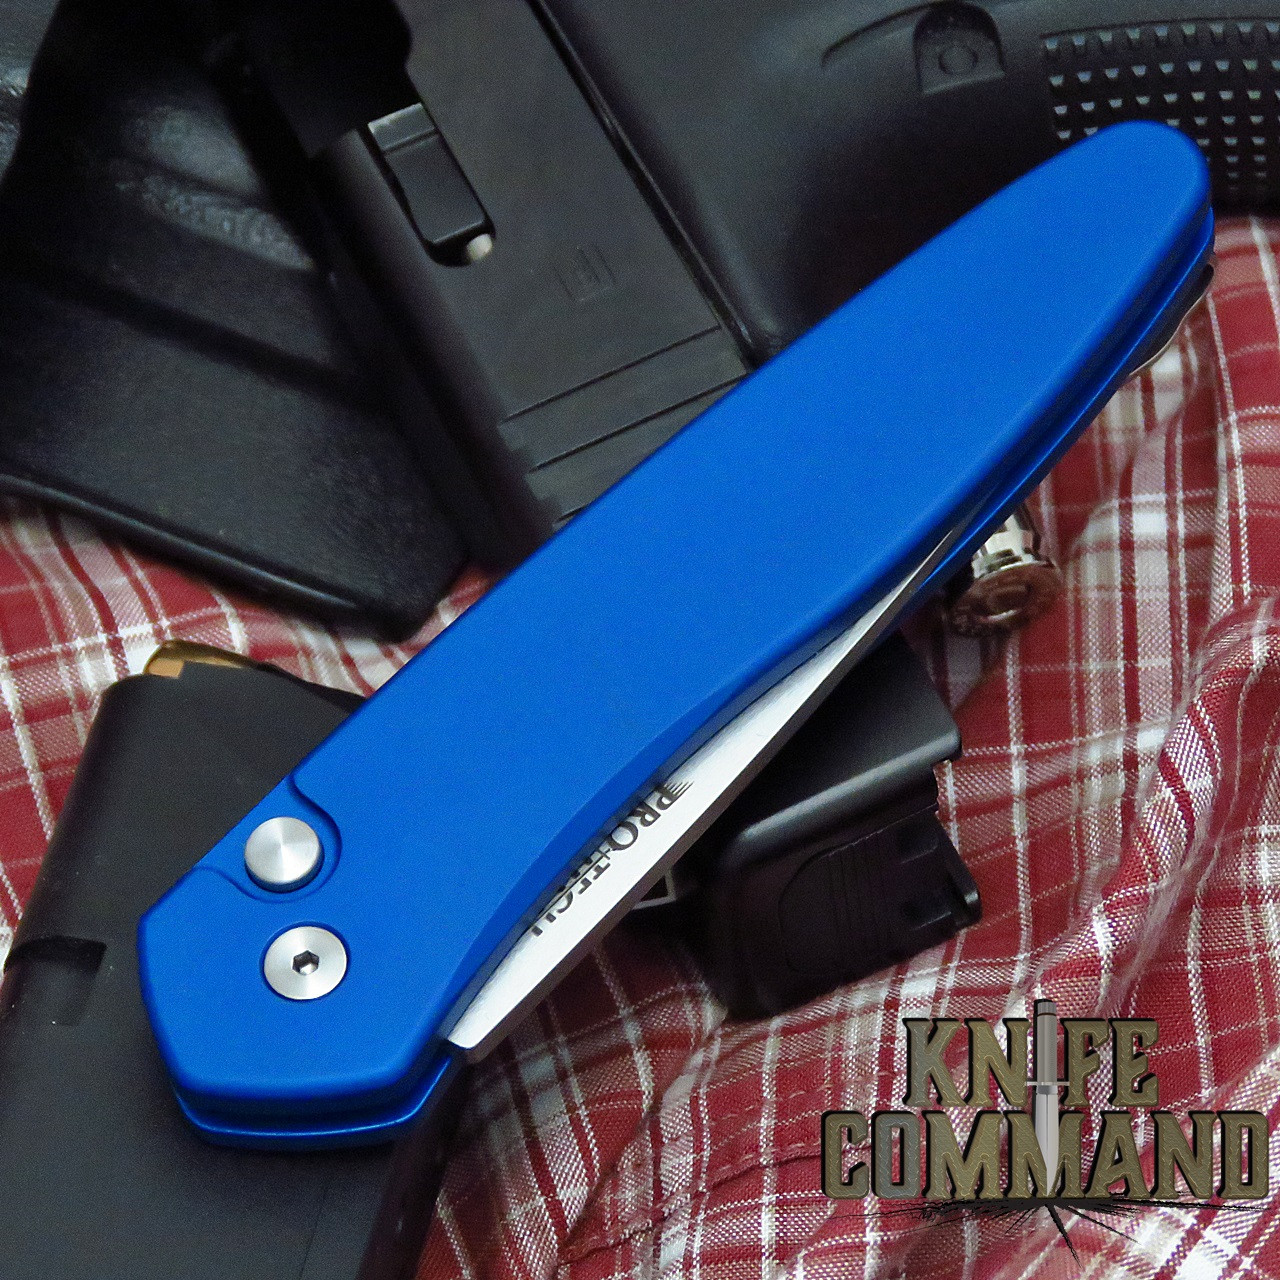 Pro-Tech Knives 3405 Blue Newport Automatic Knife Folder 3" Stonewash CPM-S35VN Blade